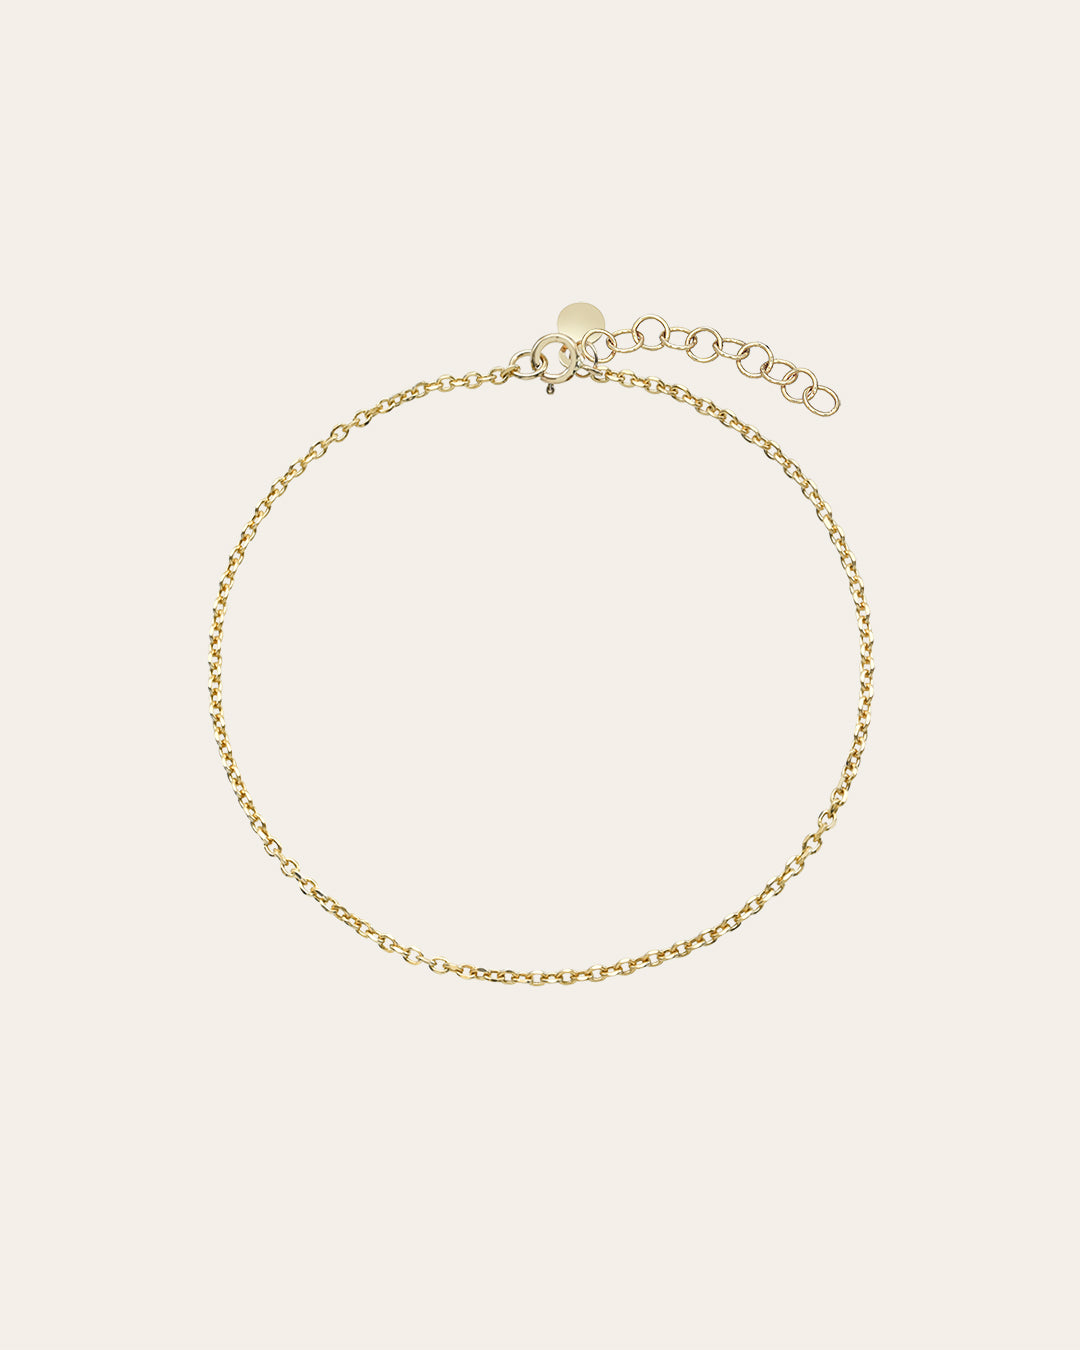 14k Gold Cable Link Chain Bracelet